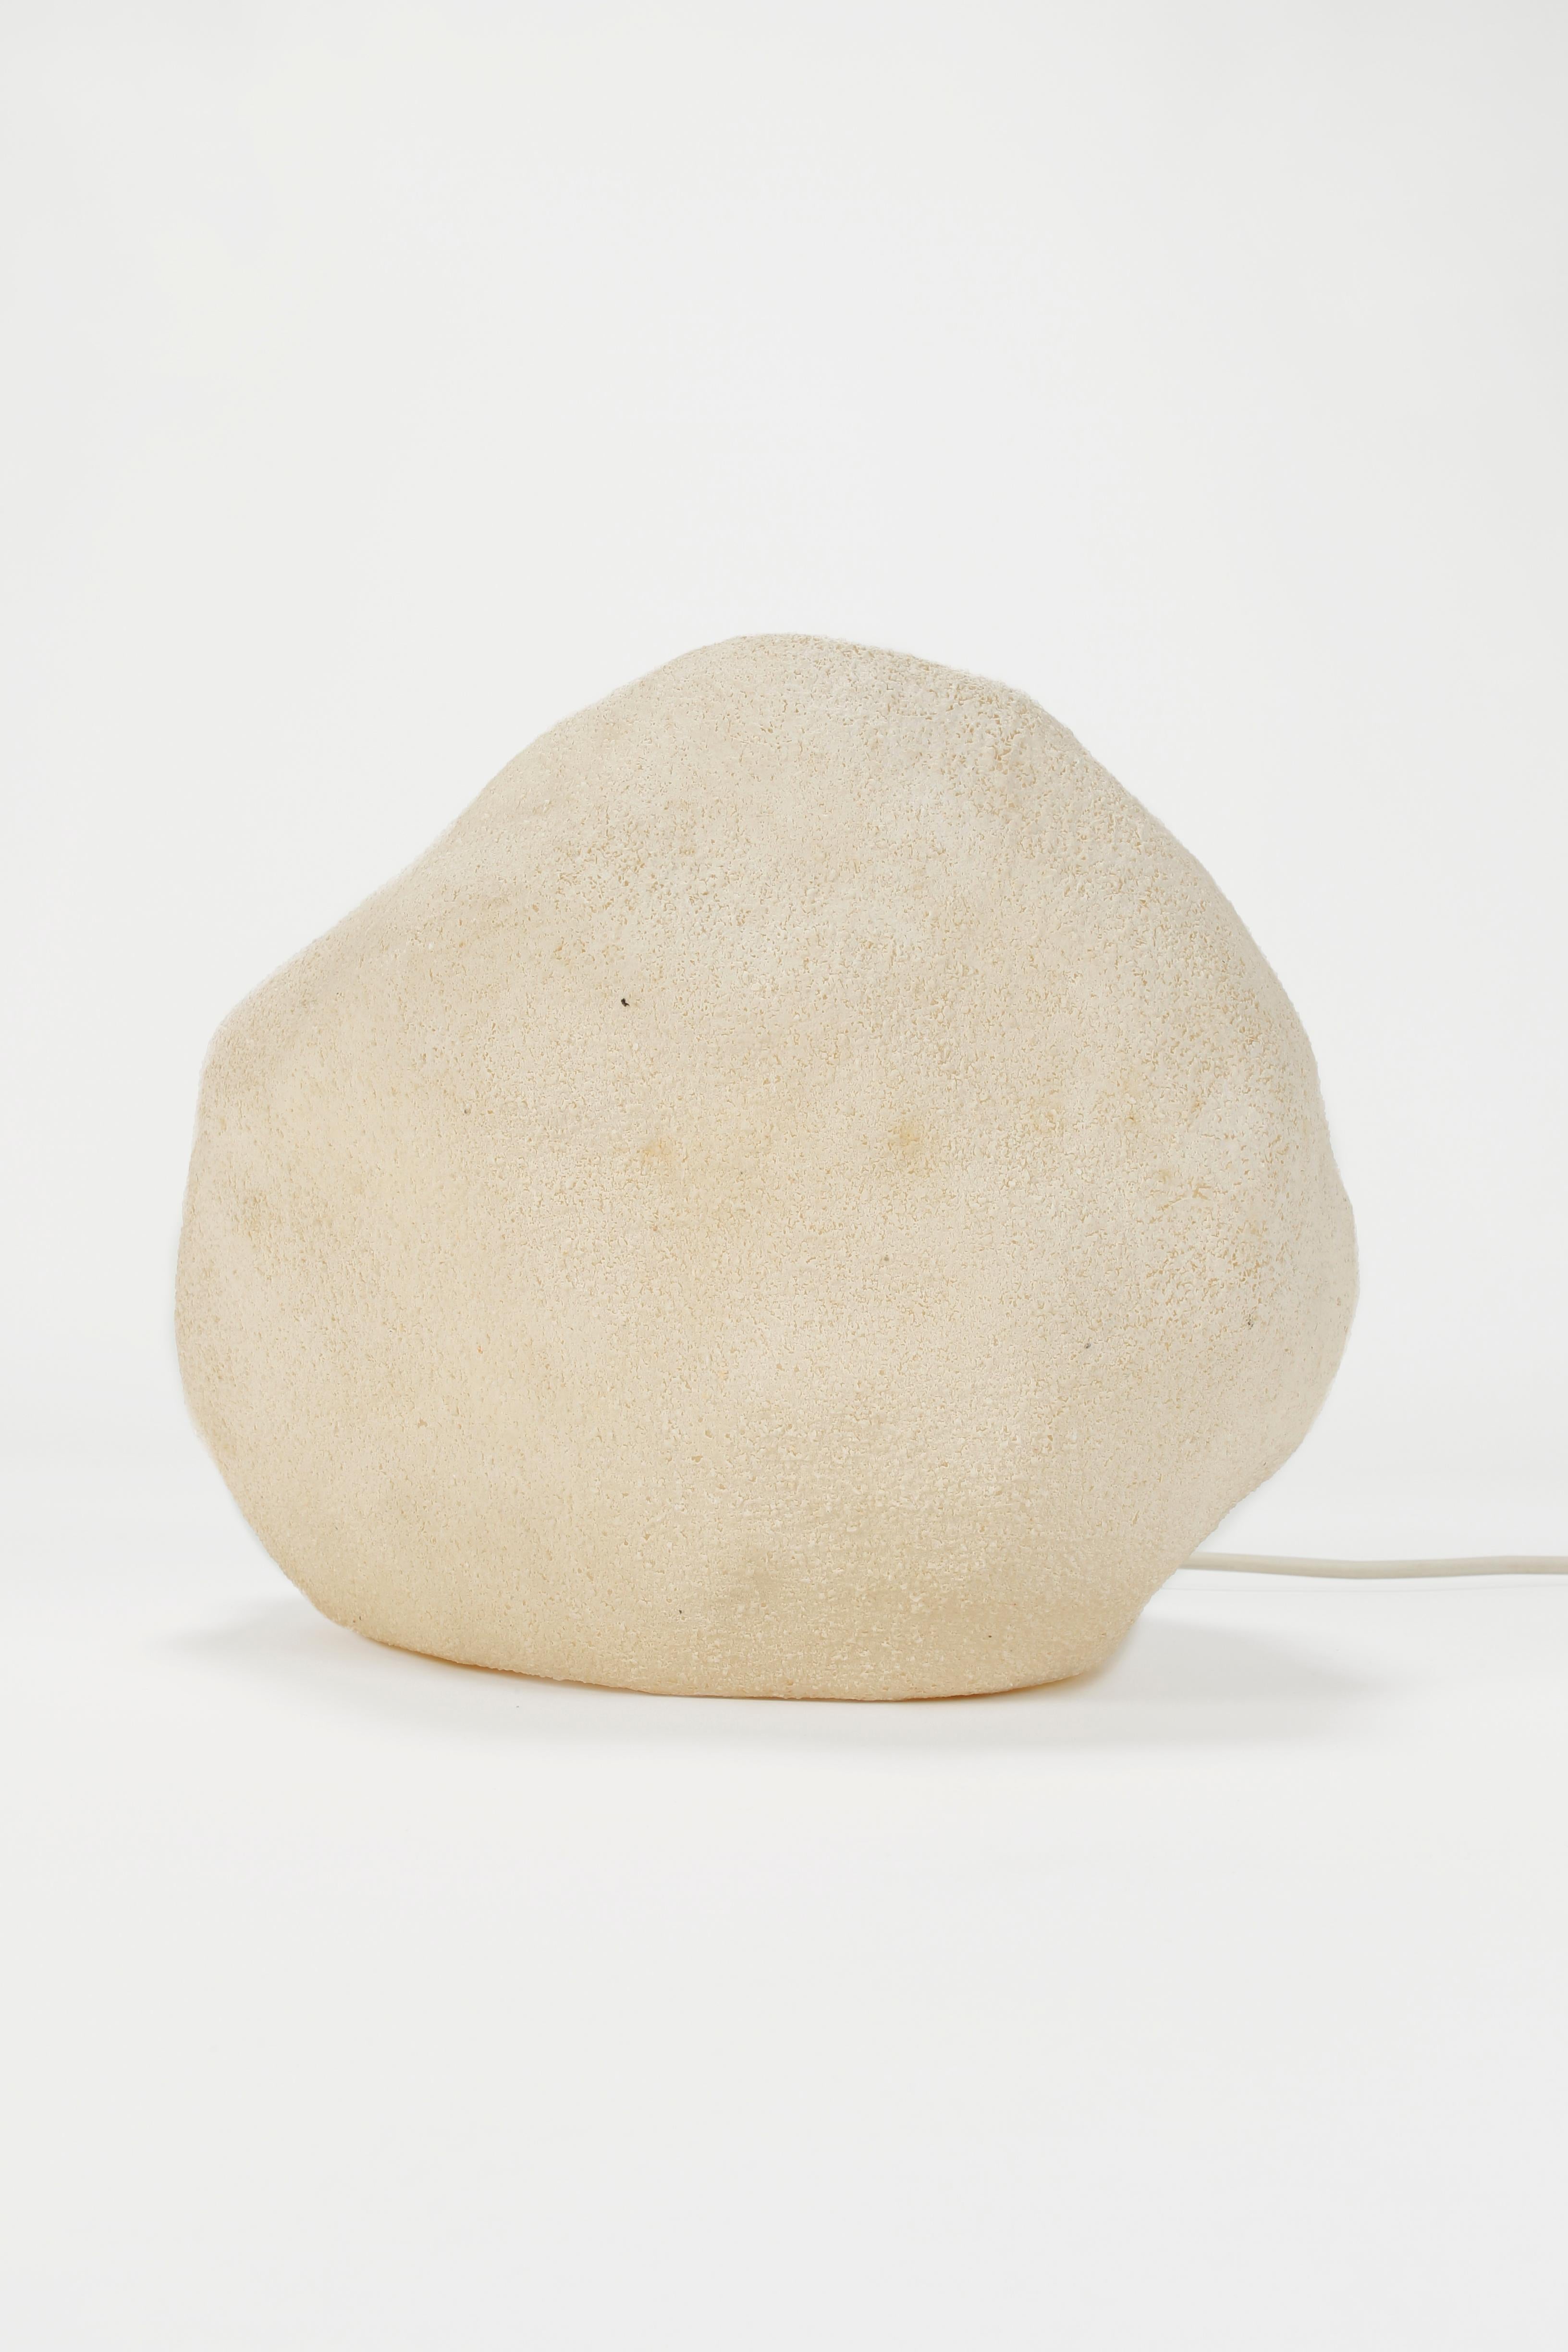 Mid-Century Modern André Cazenave “Moon Rock Light” Singleton 1970s For Sale